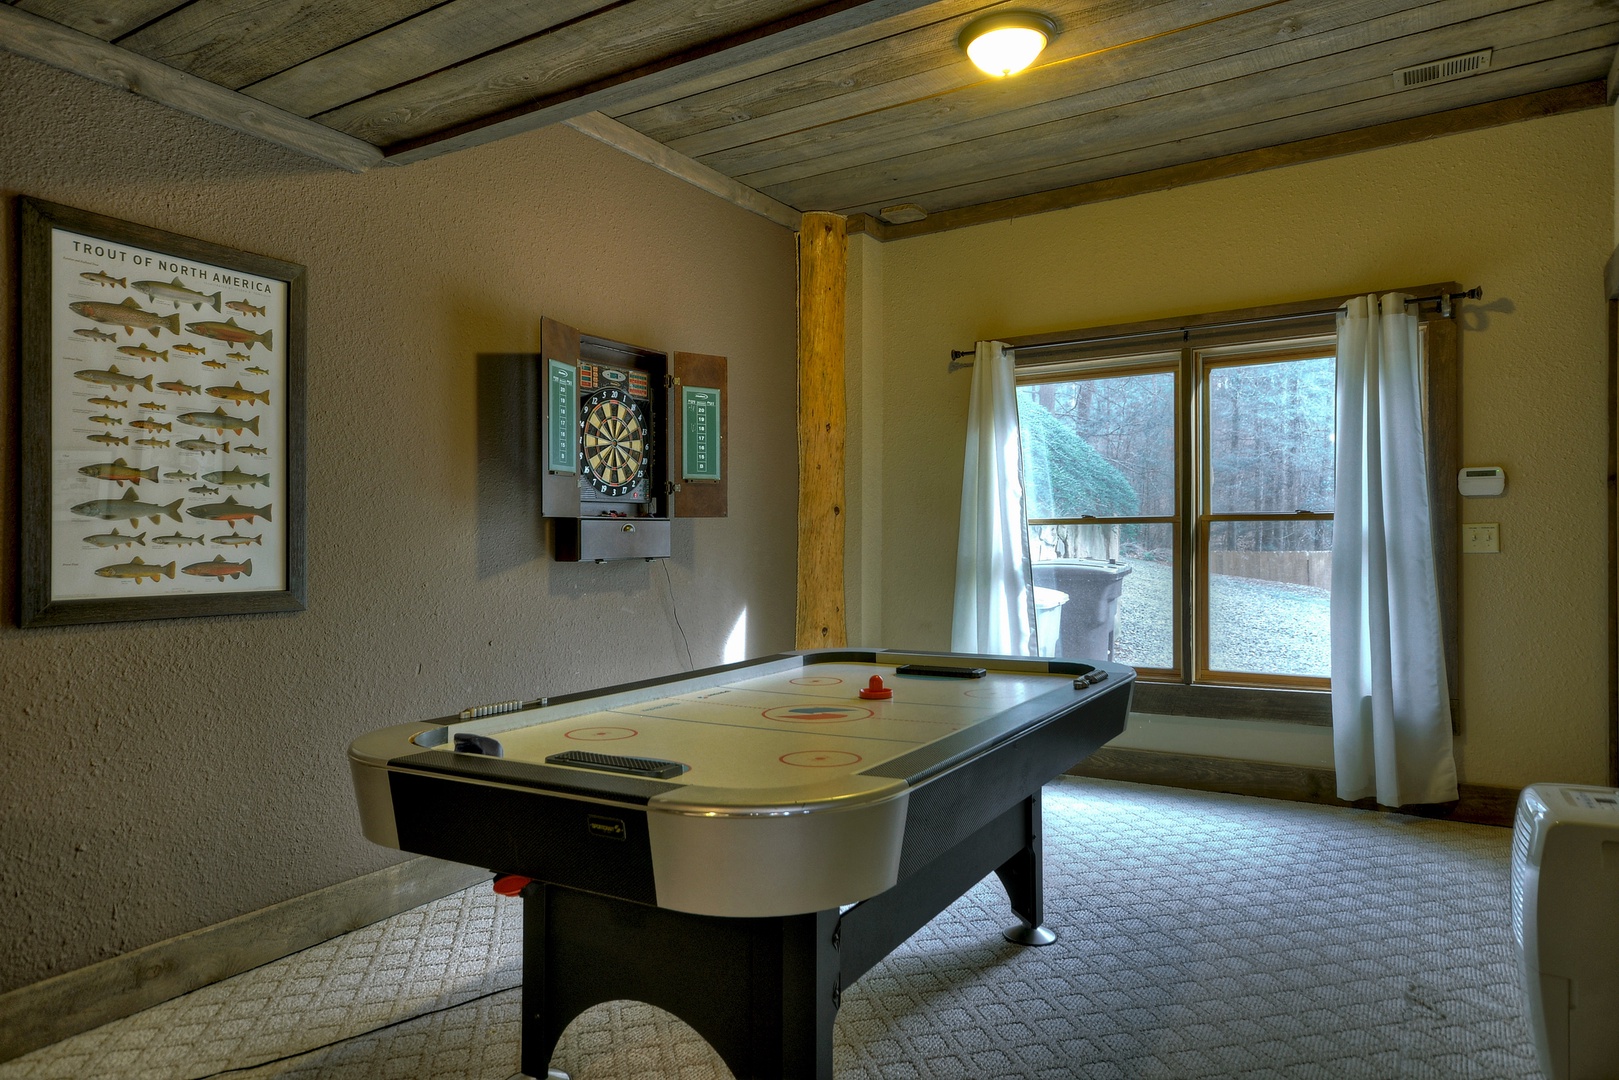 Reel Creek Lodge- Lower level air hockey table and dart board